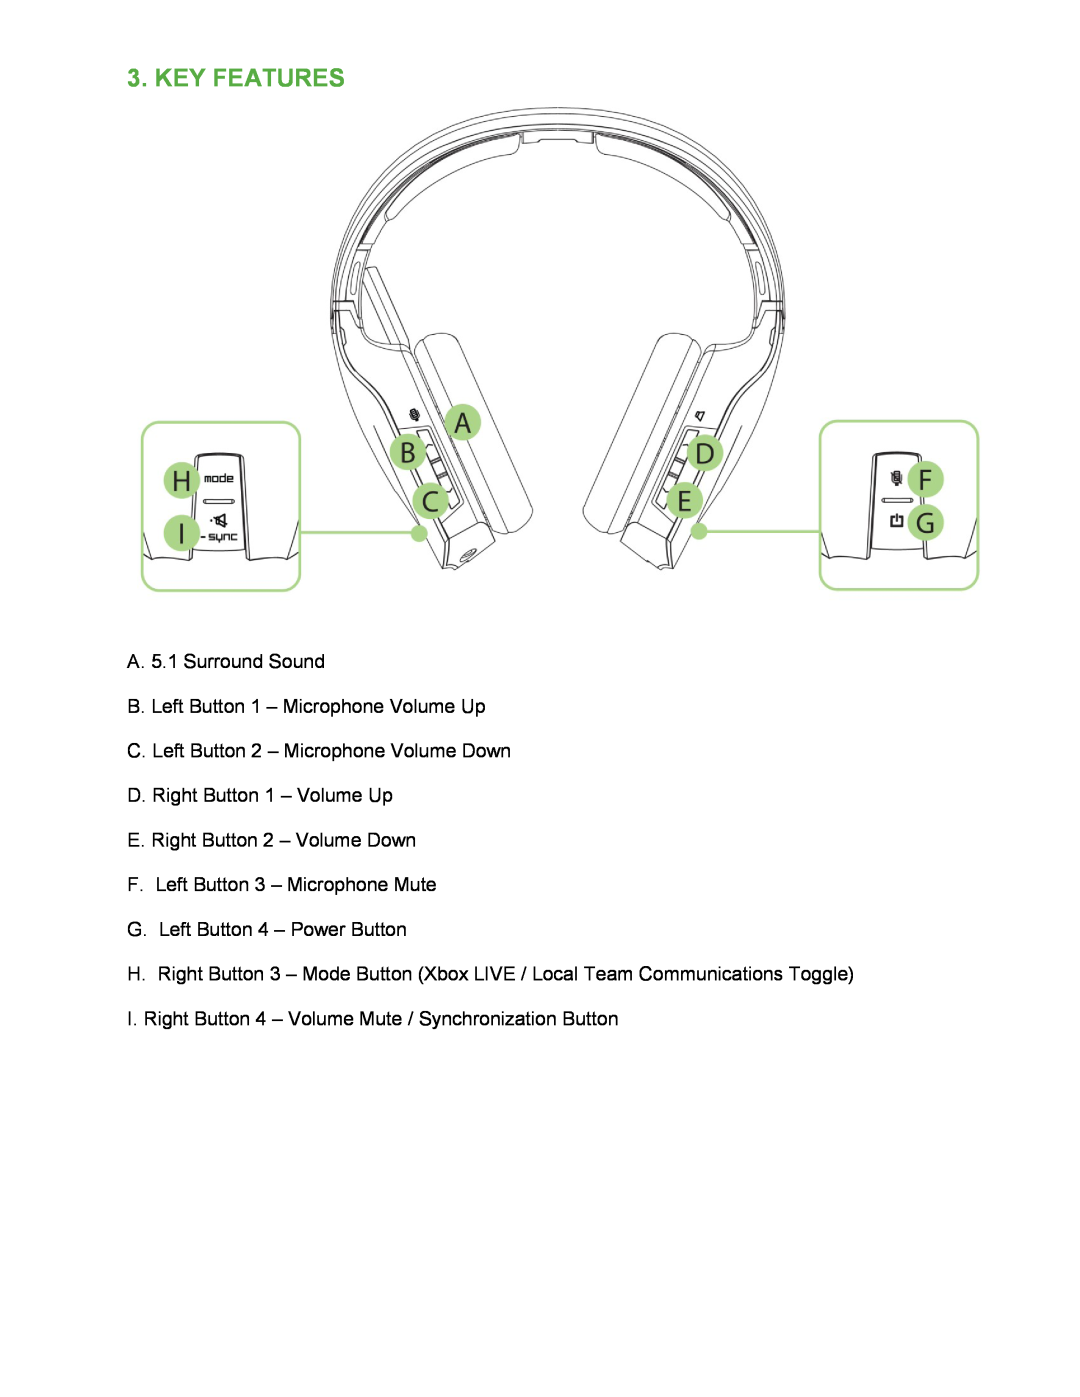 Razer Key Features, A. 5.1 Surround Sound, B. Left Button 1 - Microphone Volume Up, D. Right Button 1 - Volume Up 